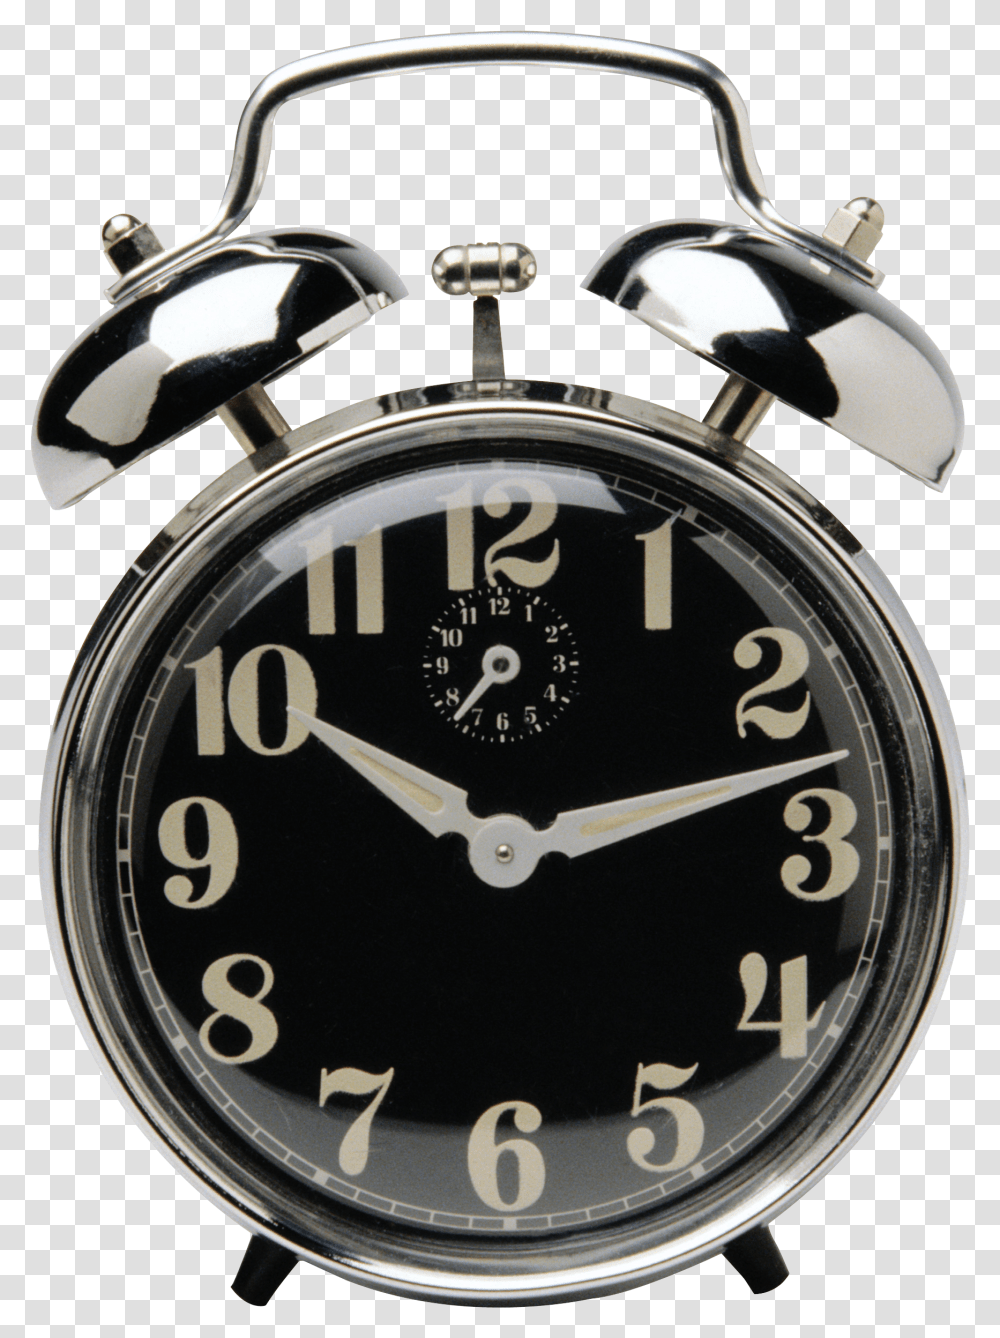 Images Pngs Alarm Clock Clocks Transparent Png